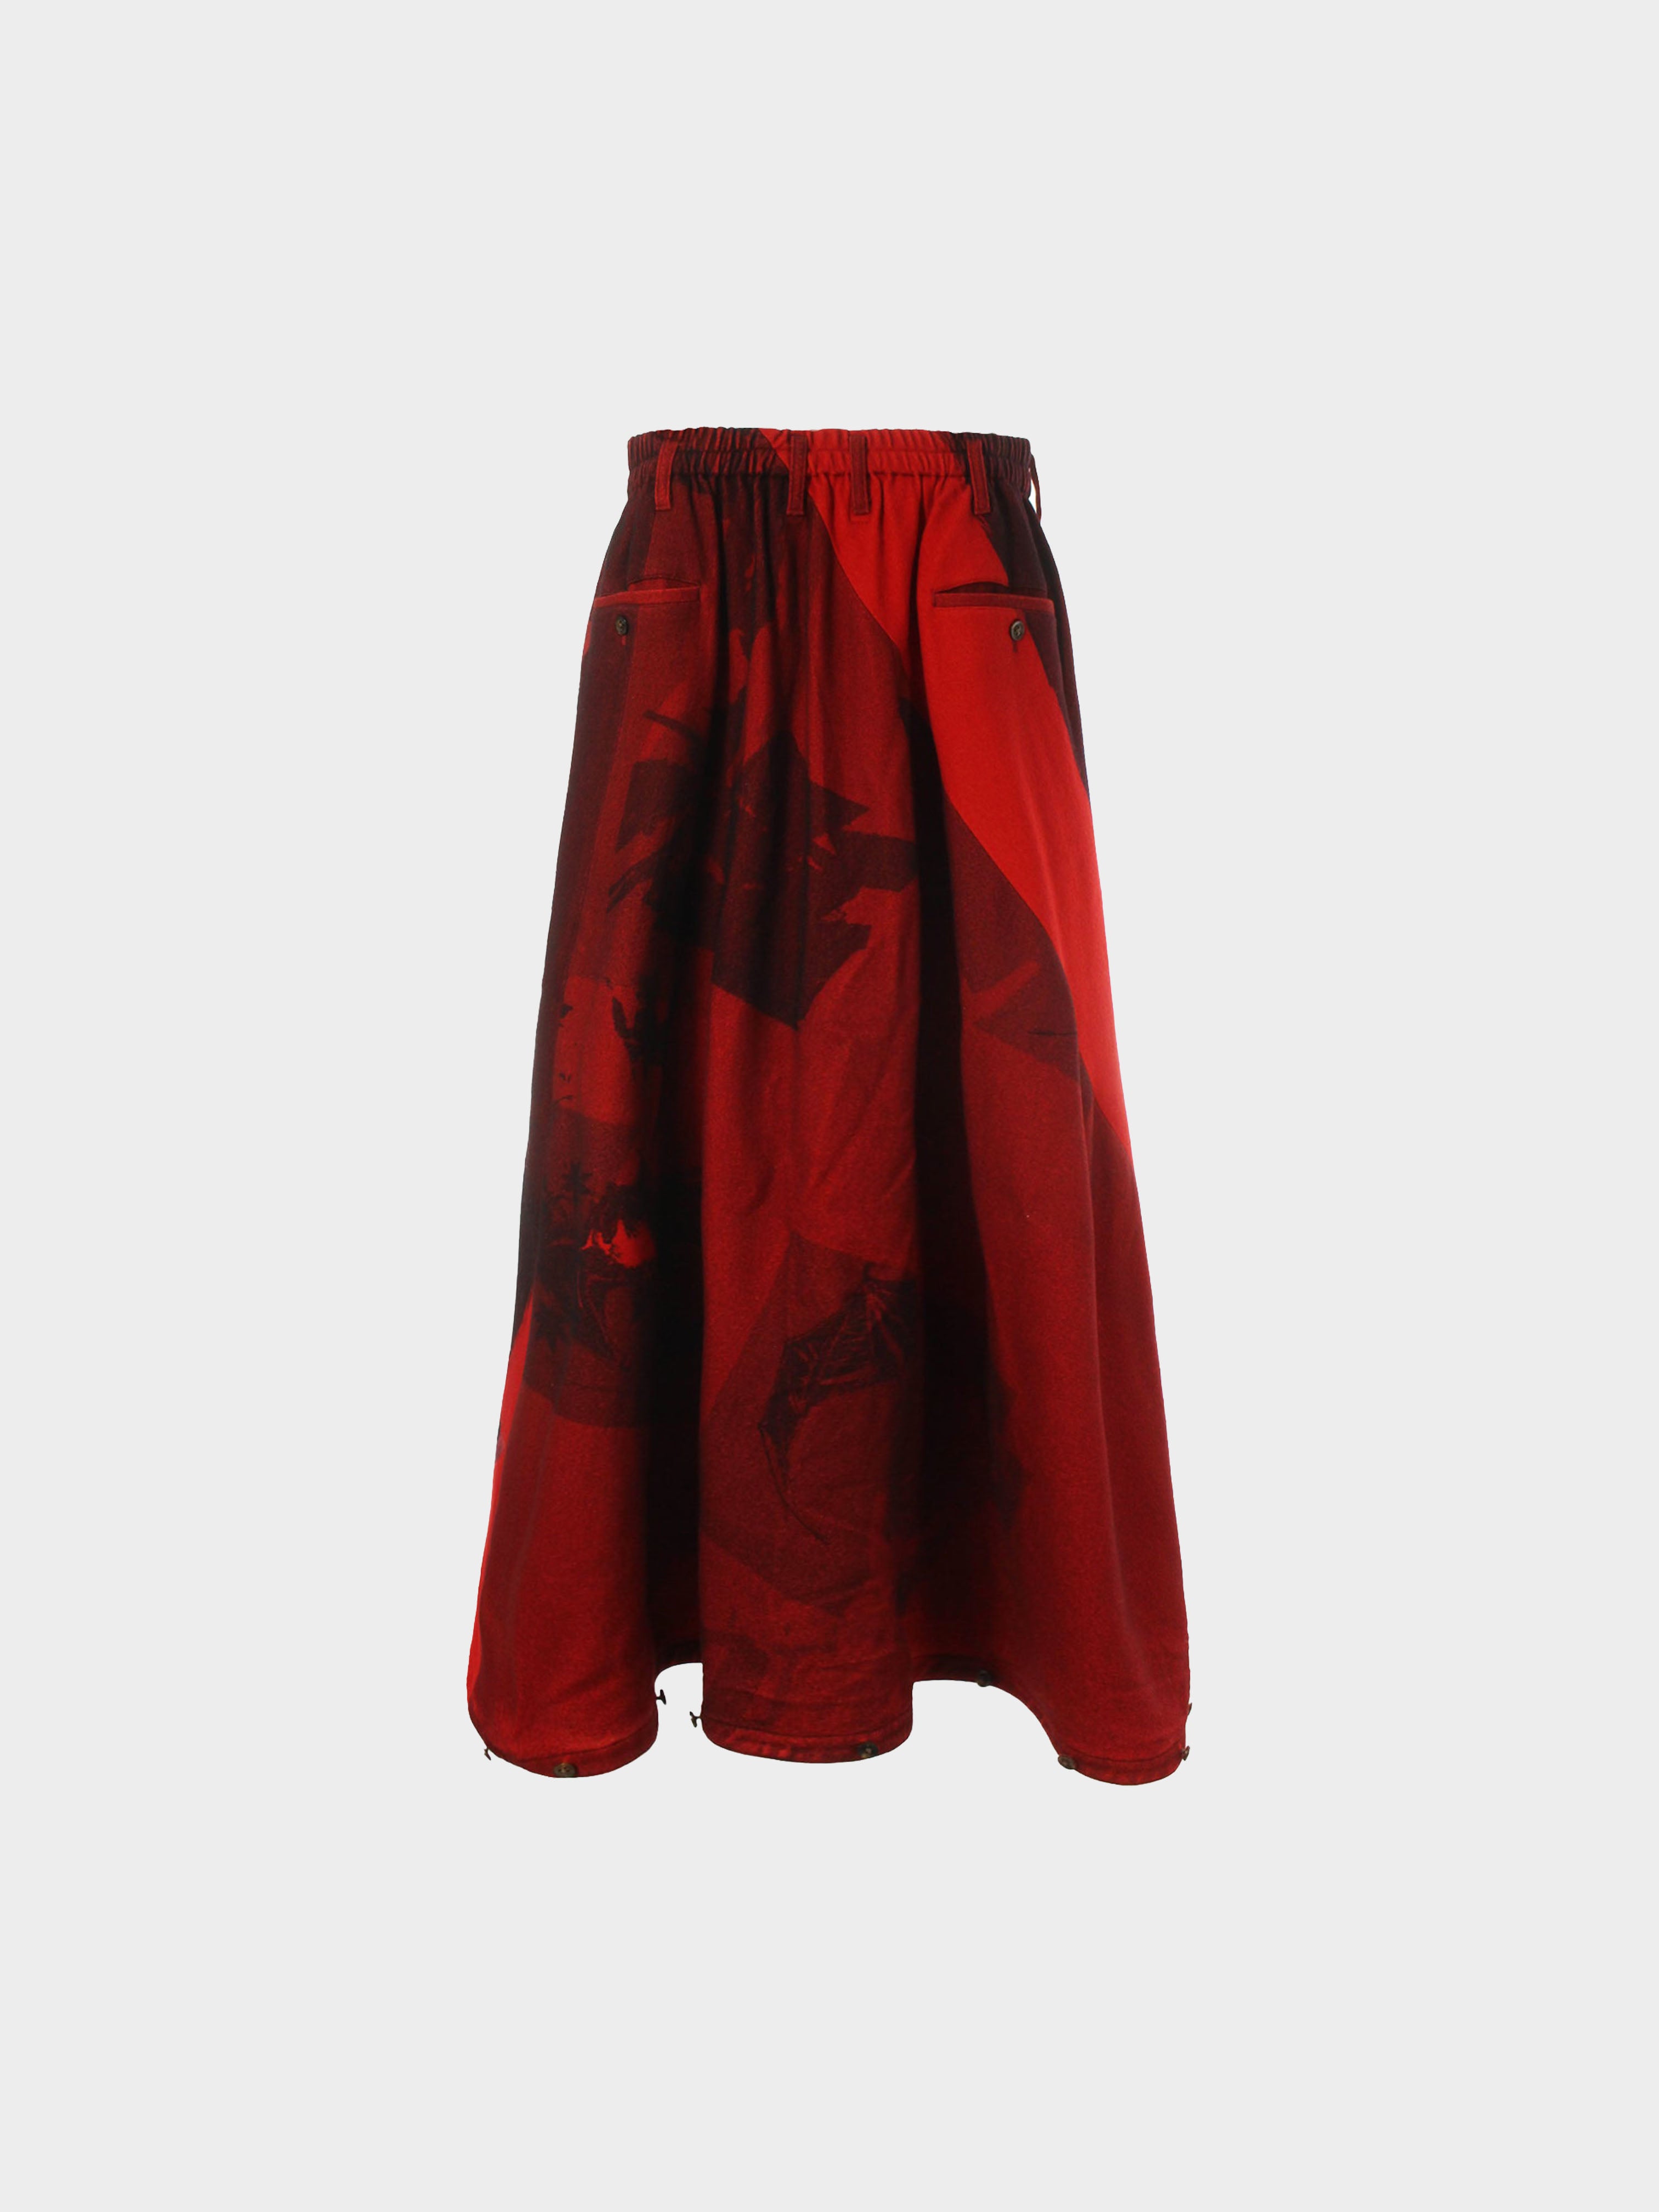 Yohji Yamamoto FW 2018 Pour Homme Red Long Skirt